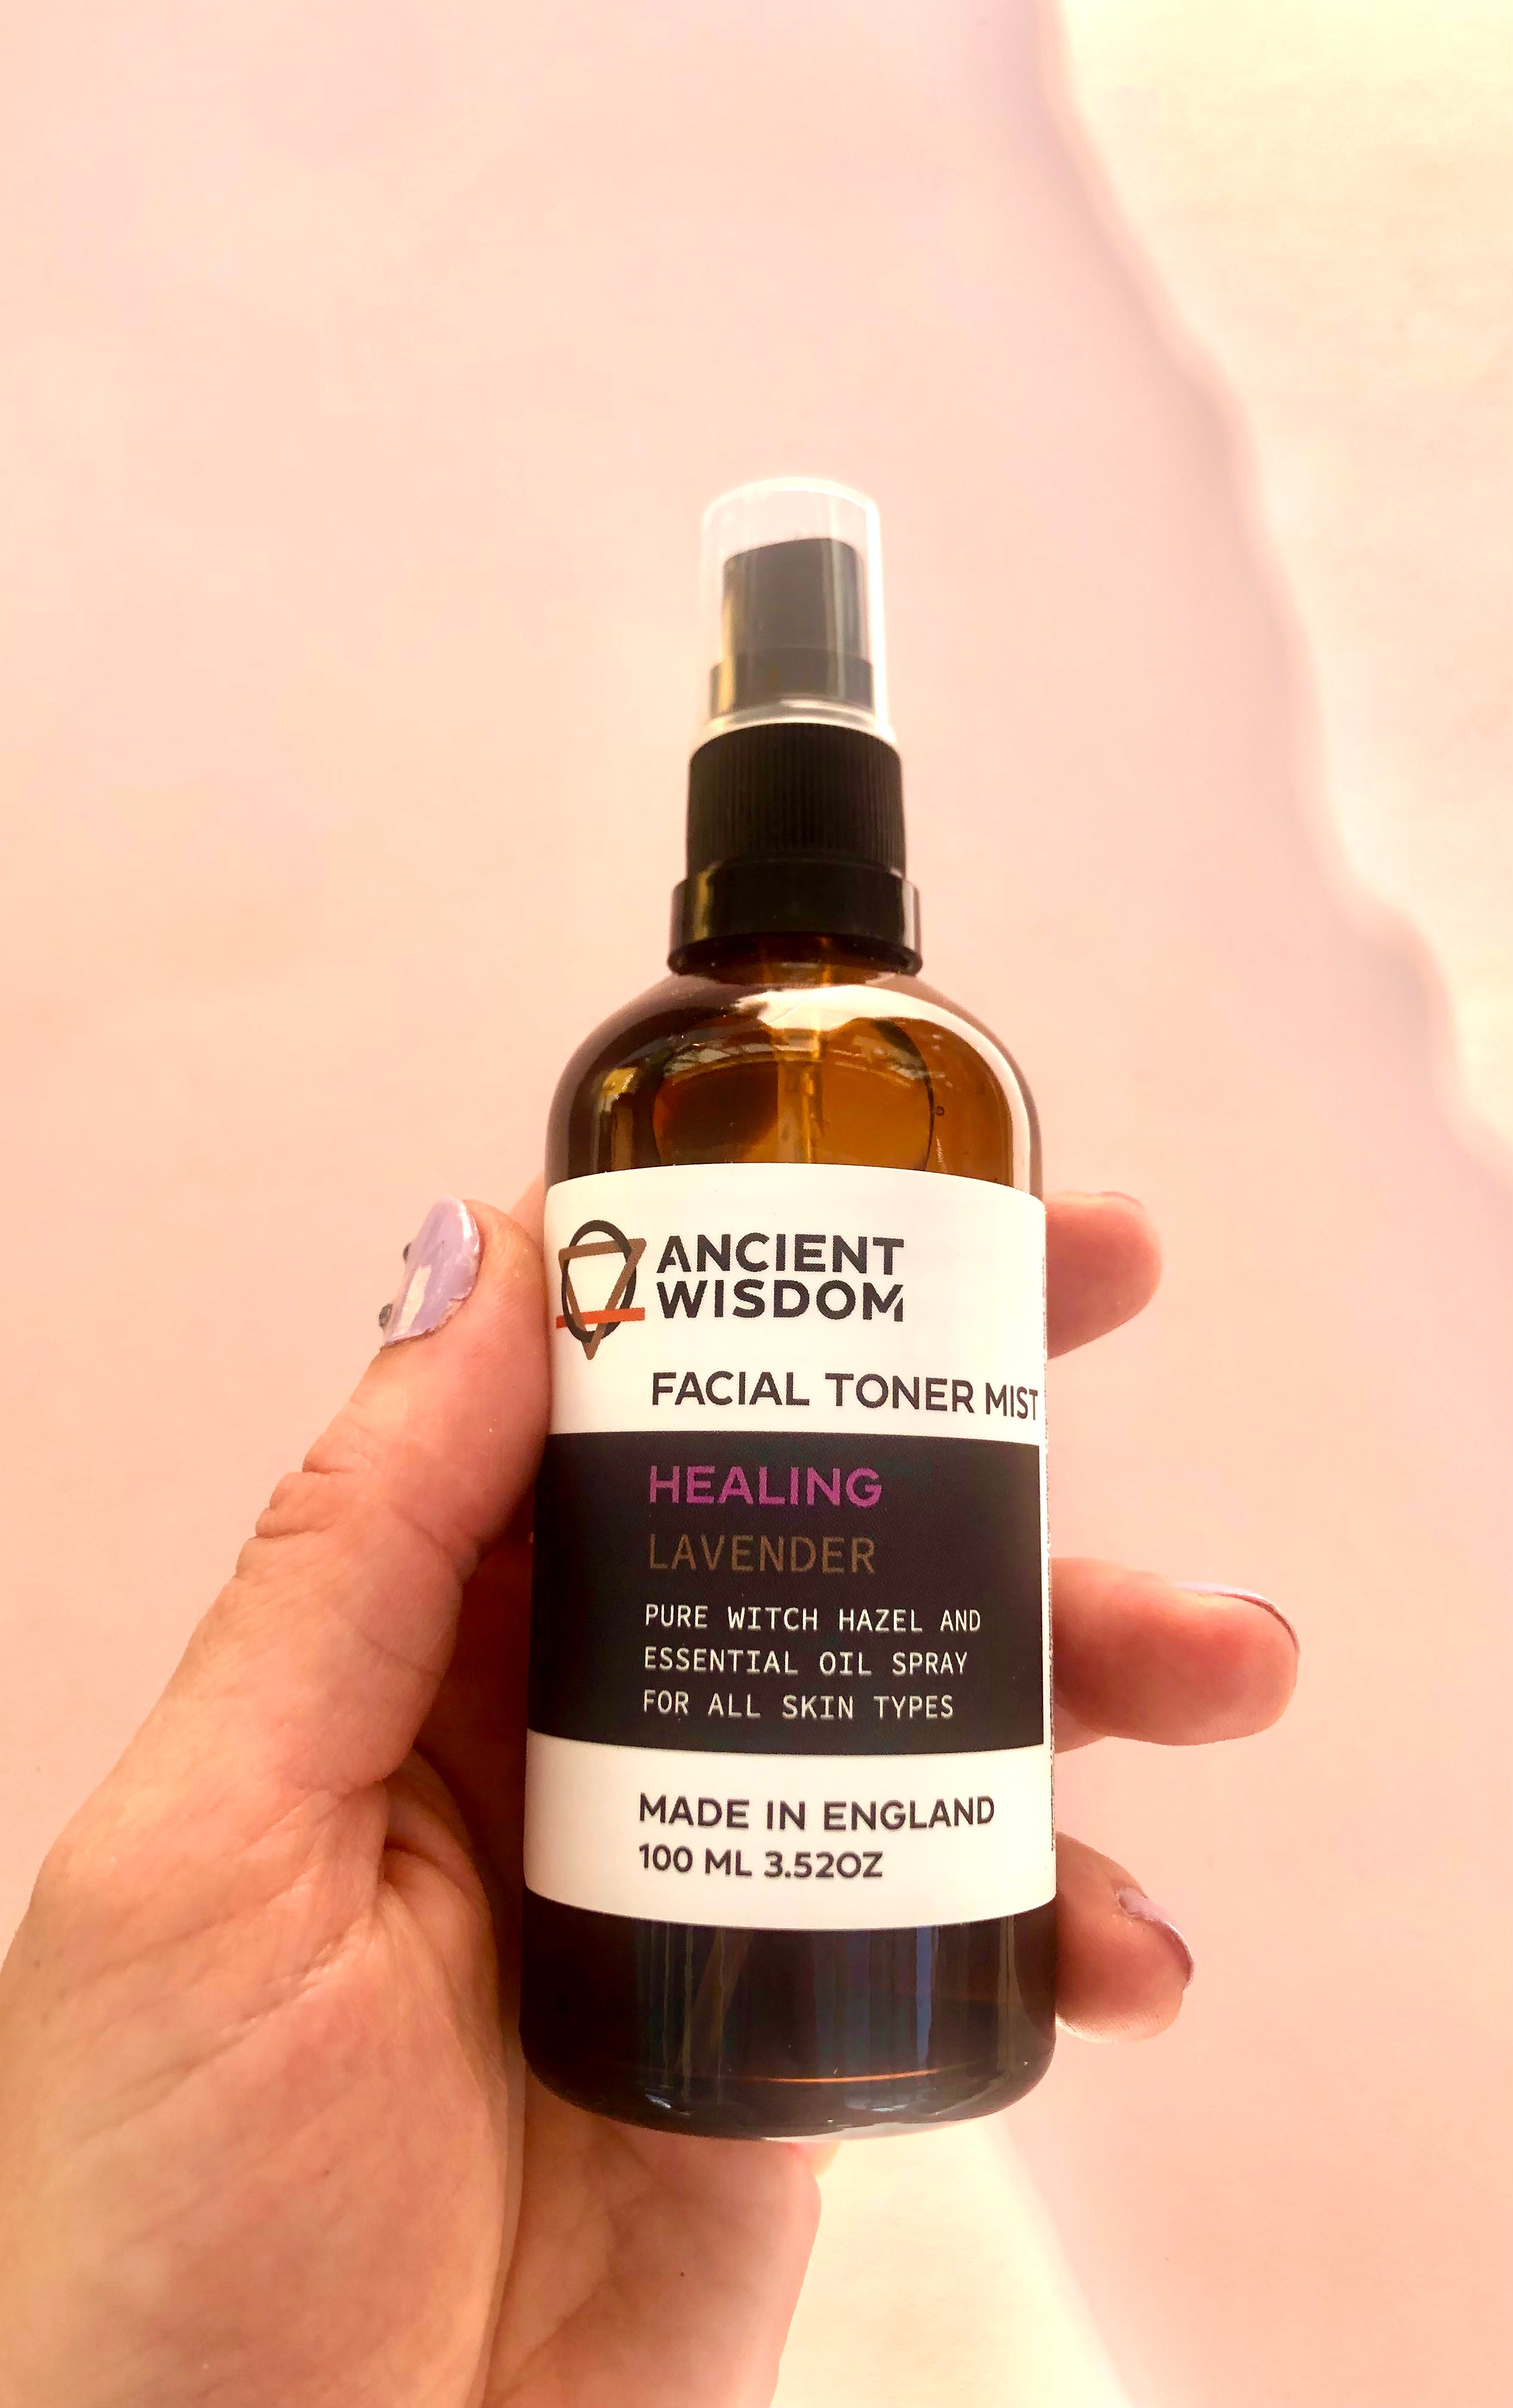 Facial Toner Mist ☽ Healing Lavender ☽ fra Ancient Wisdom ☽ 100 ml